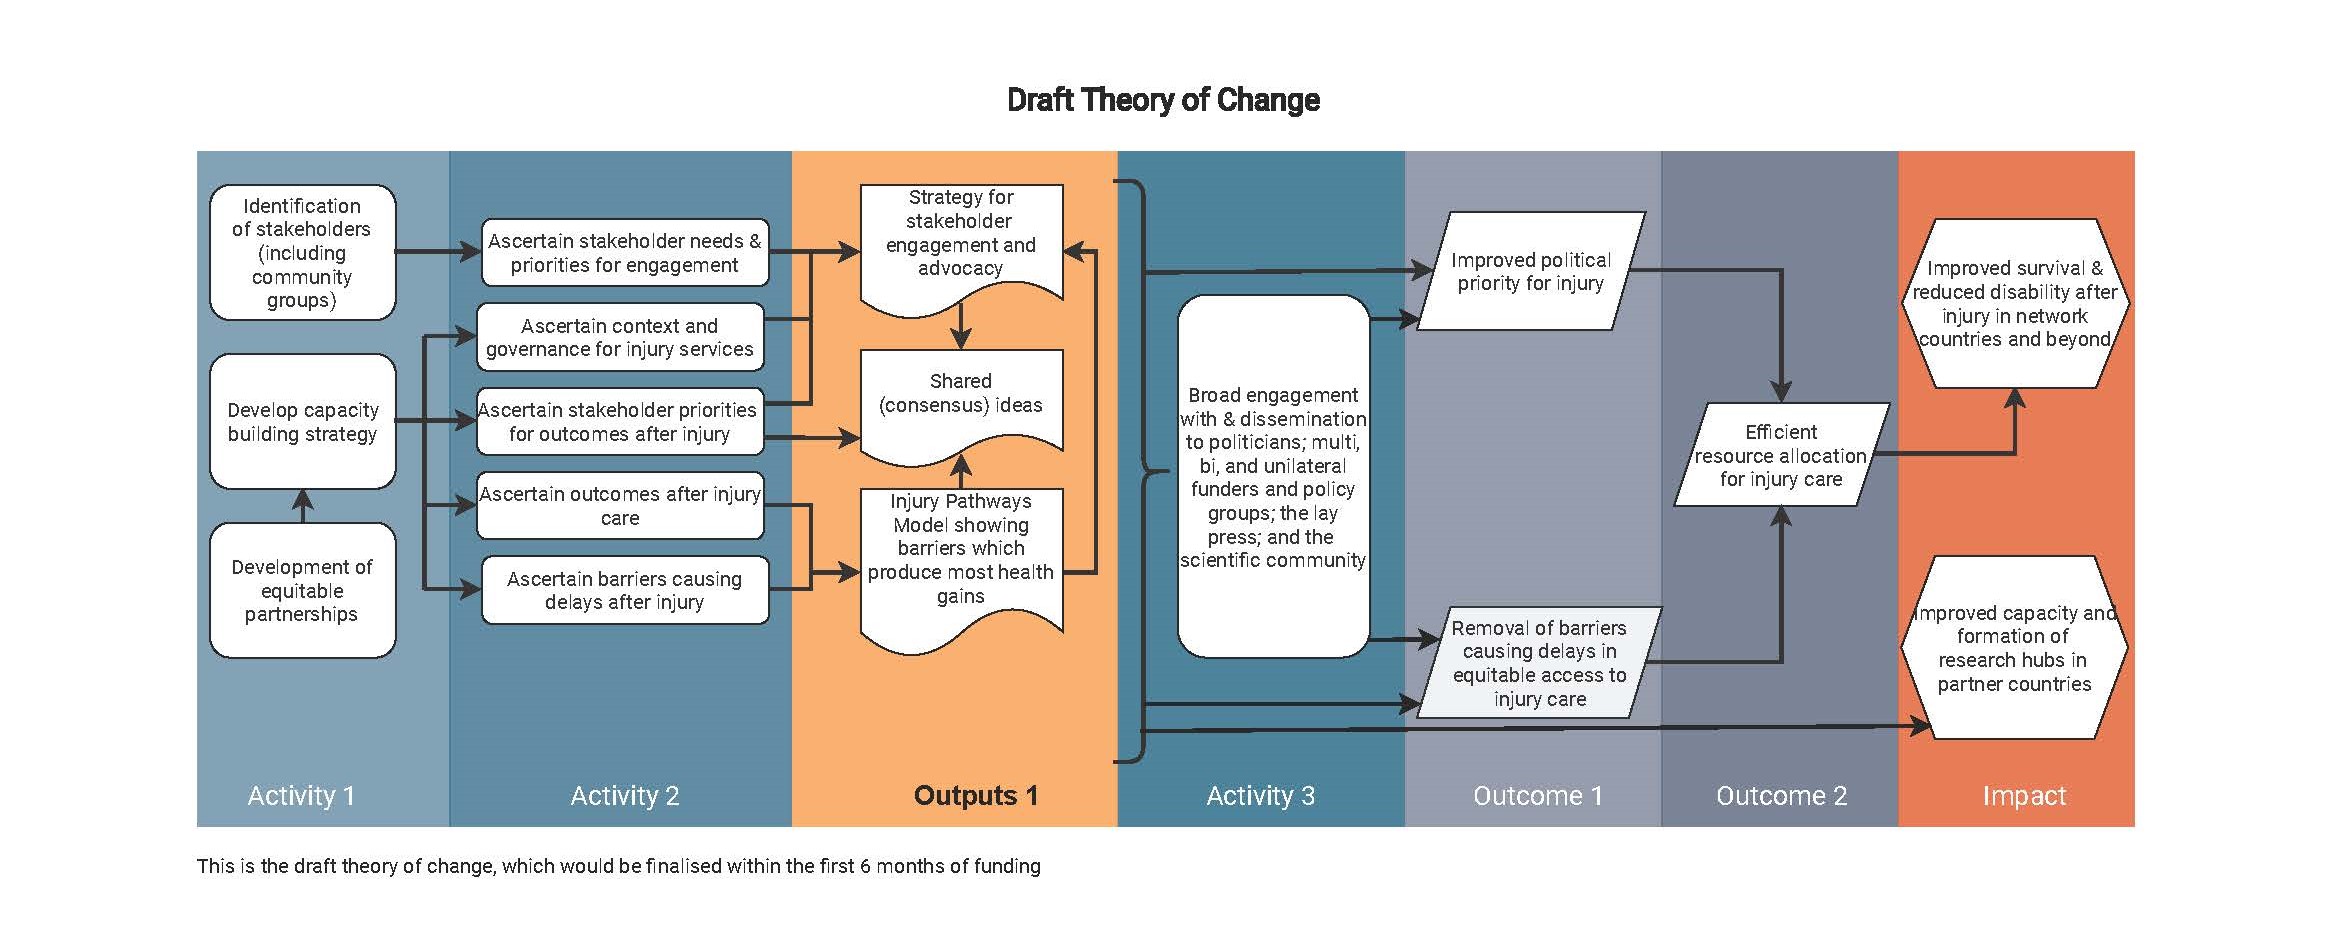 Draft Theory of Change